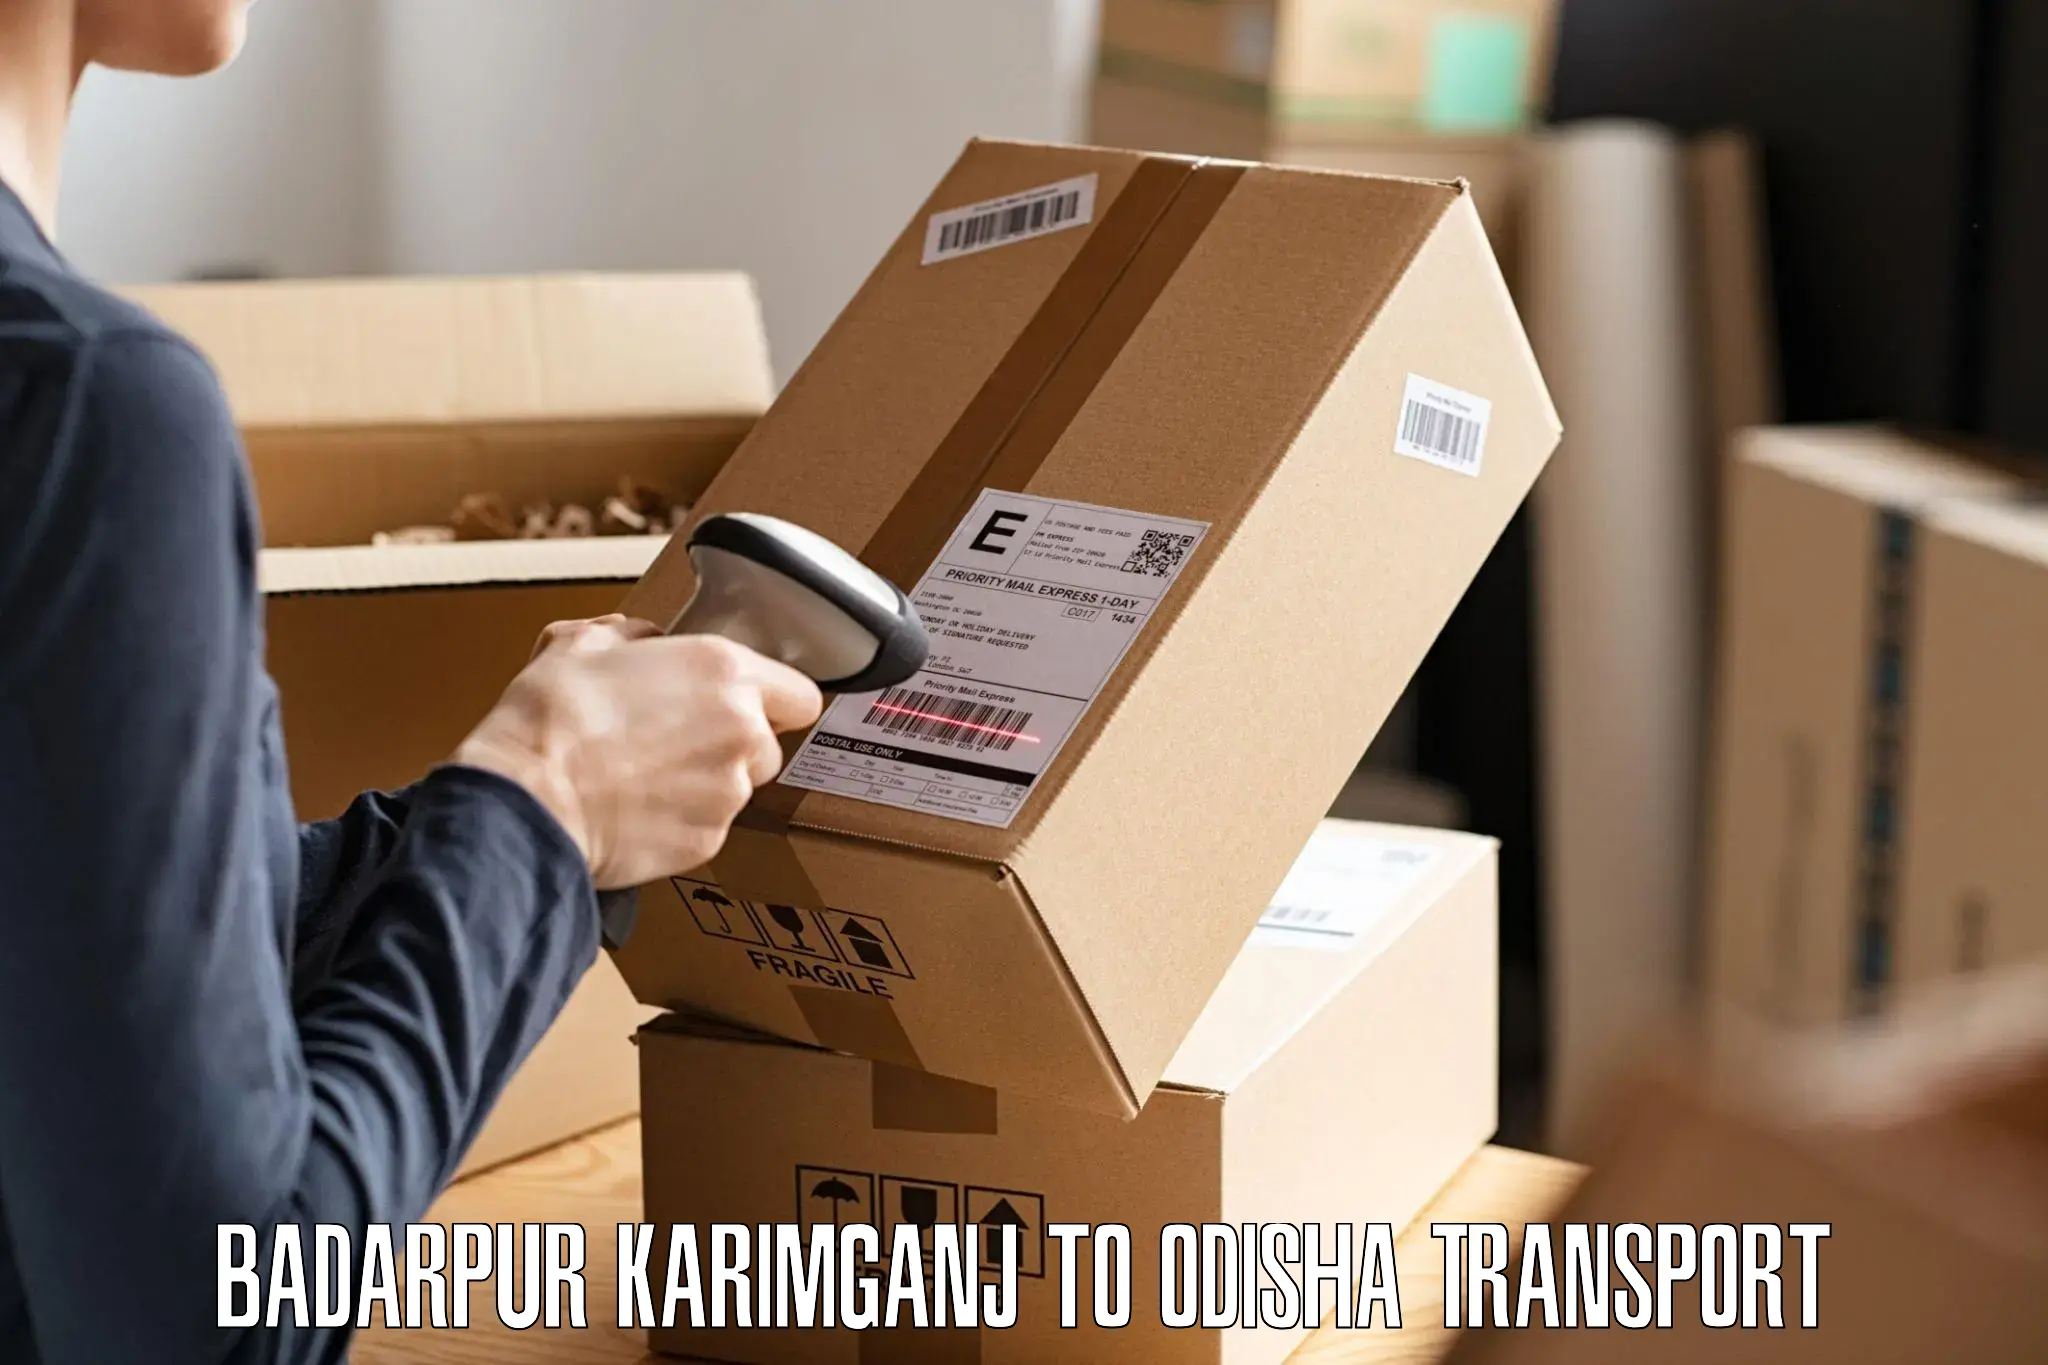 Online transport service Badarpur Karimganj to Bhubaneswar